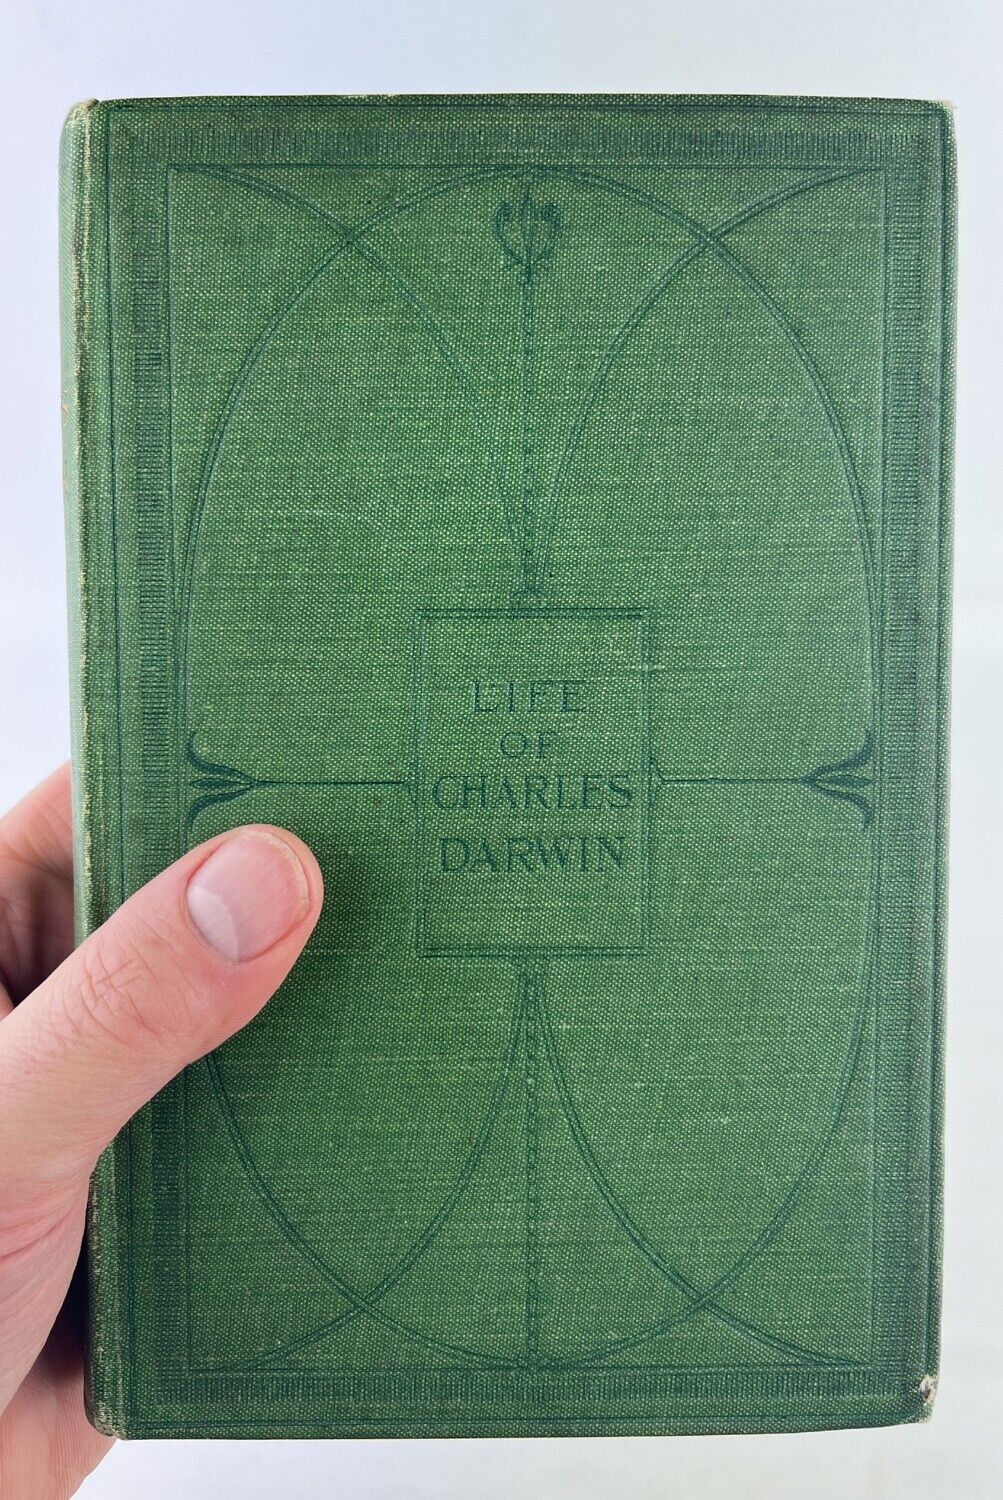 DARWIN BOOK~SIGNED BY BERNARD HENRY SPILSBURY~FAMOUS MURDER FORENSIC PATHOLOGIST